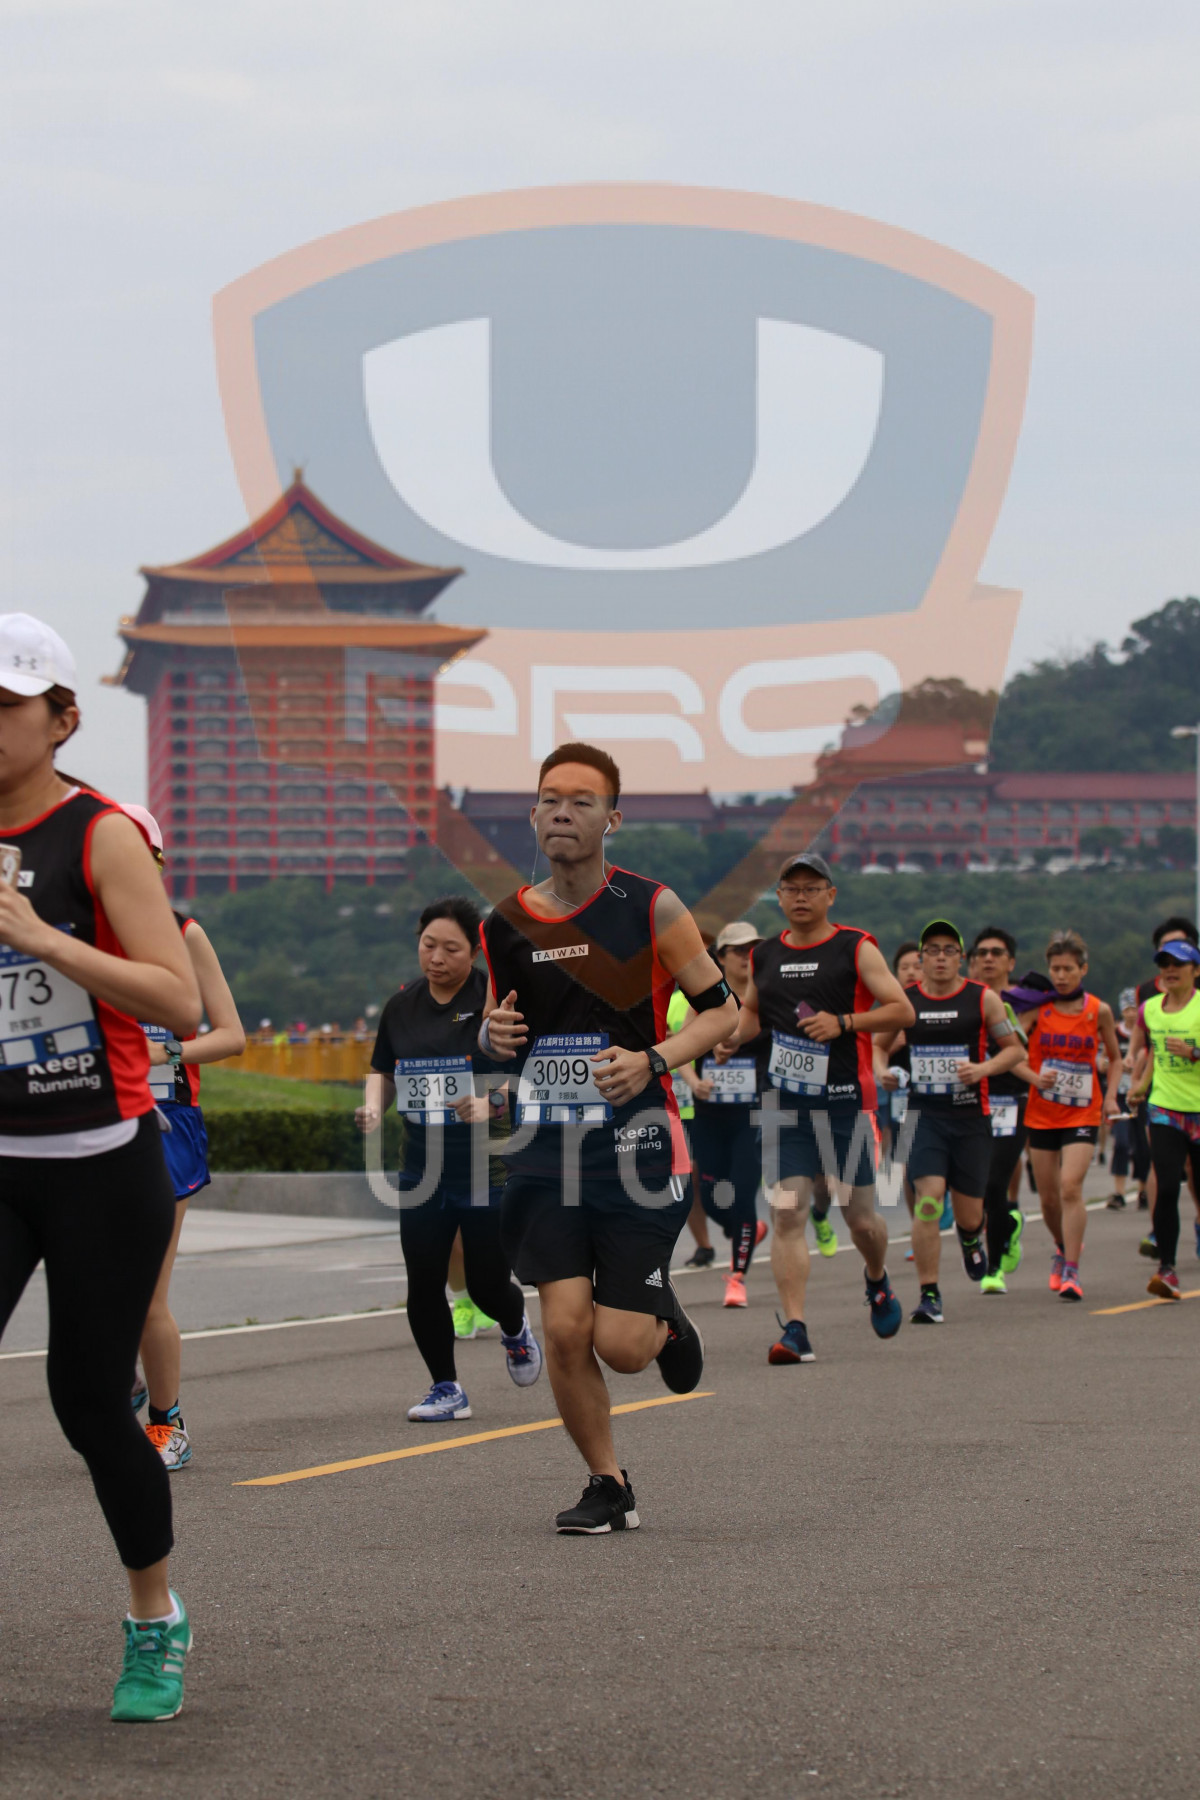 73,Running,3318,3099,Keep,Runin9|2018 第九屆阿甘盃公益路跑|Soryu Asuka Langley